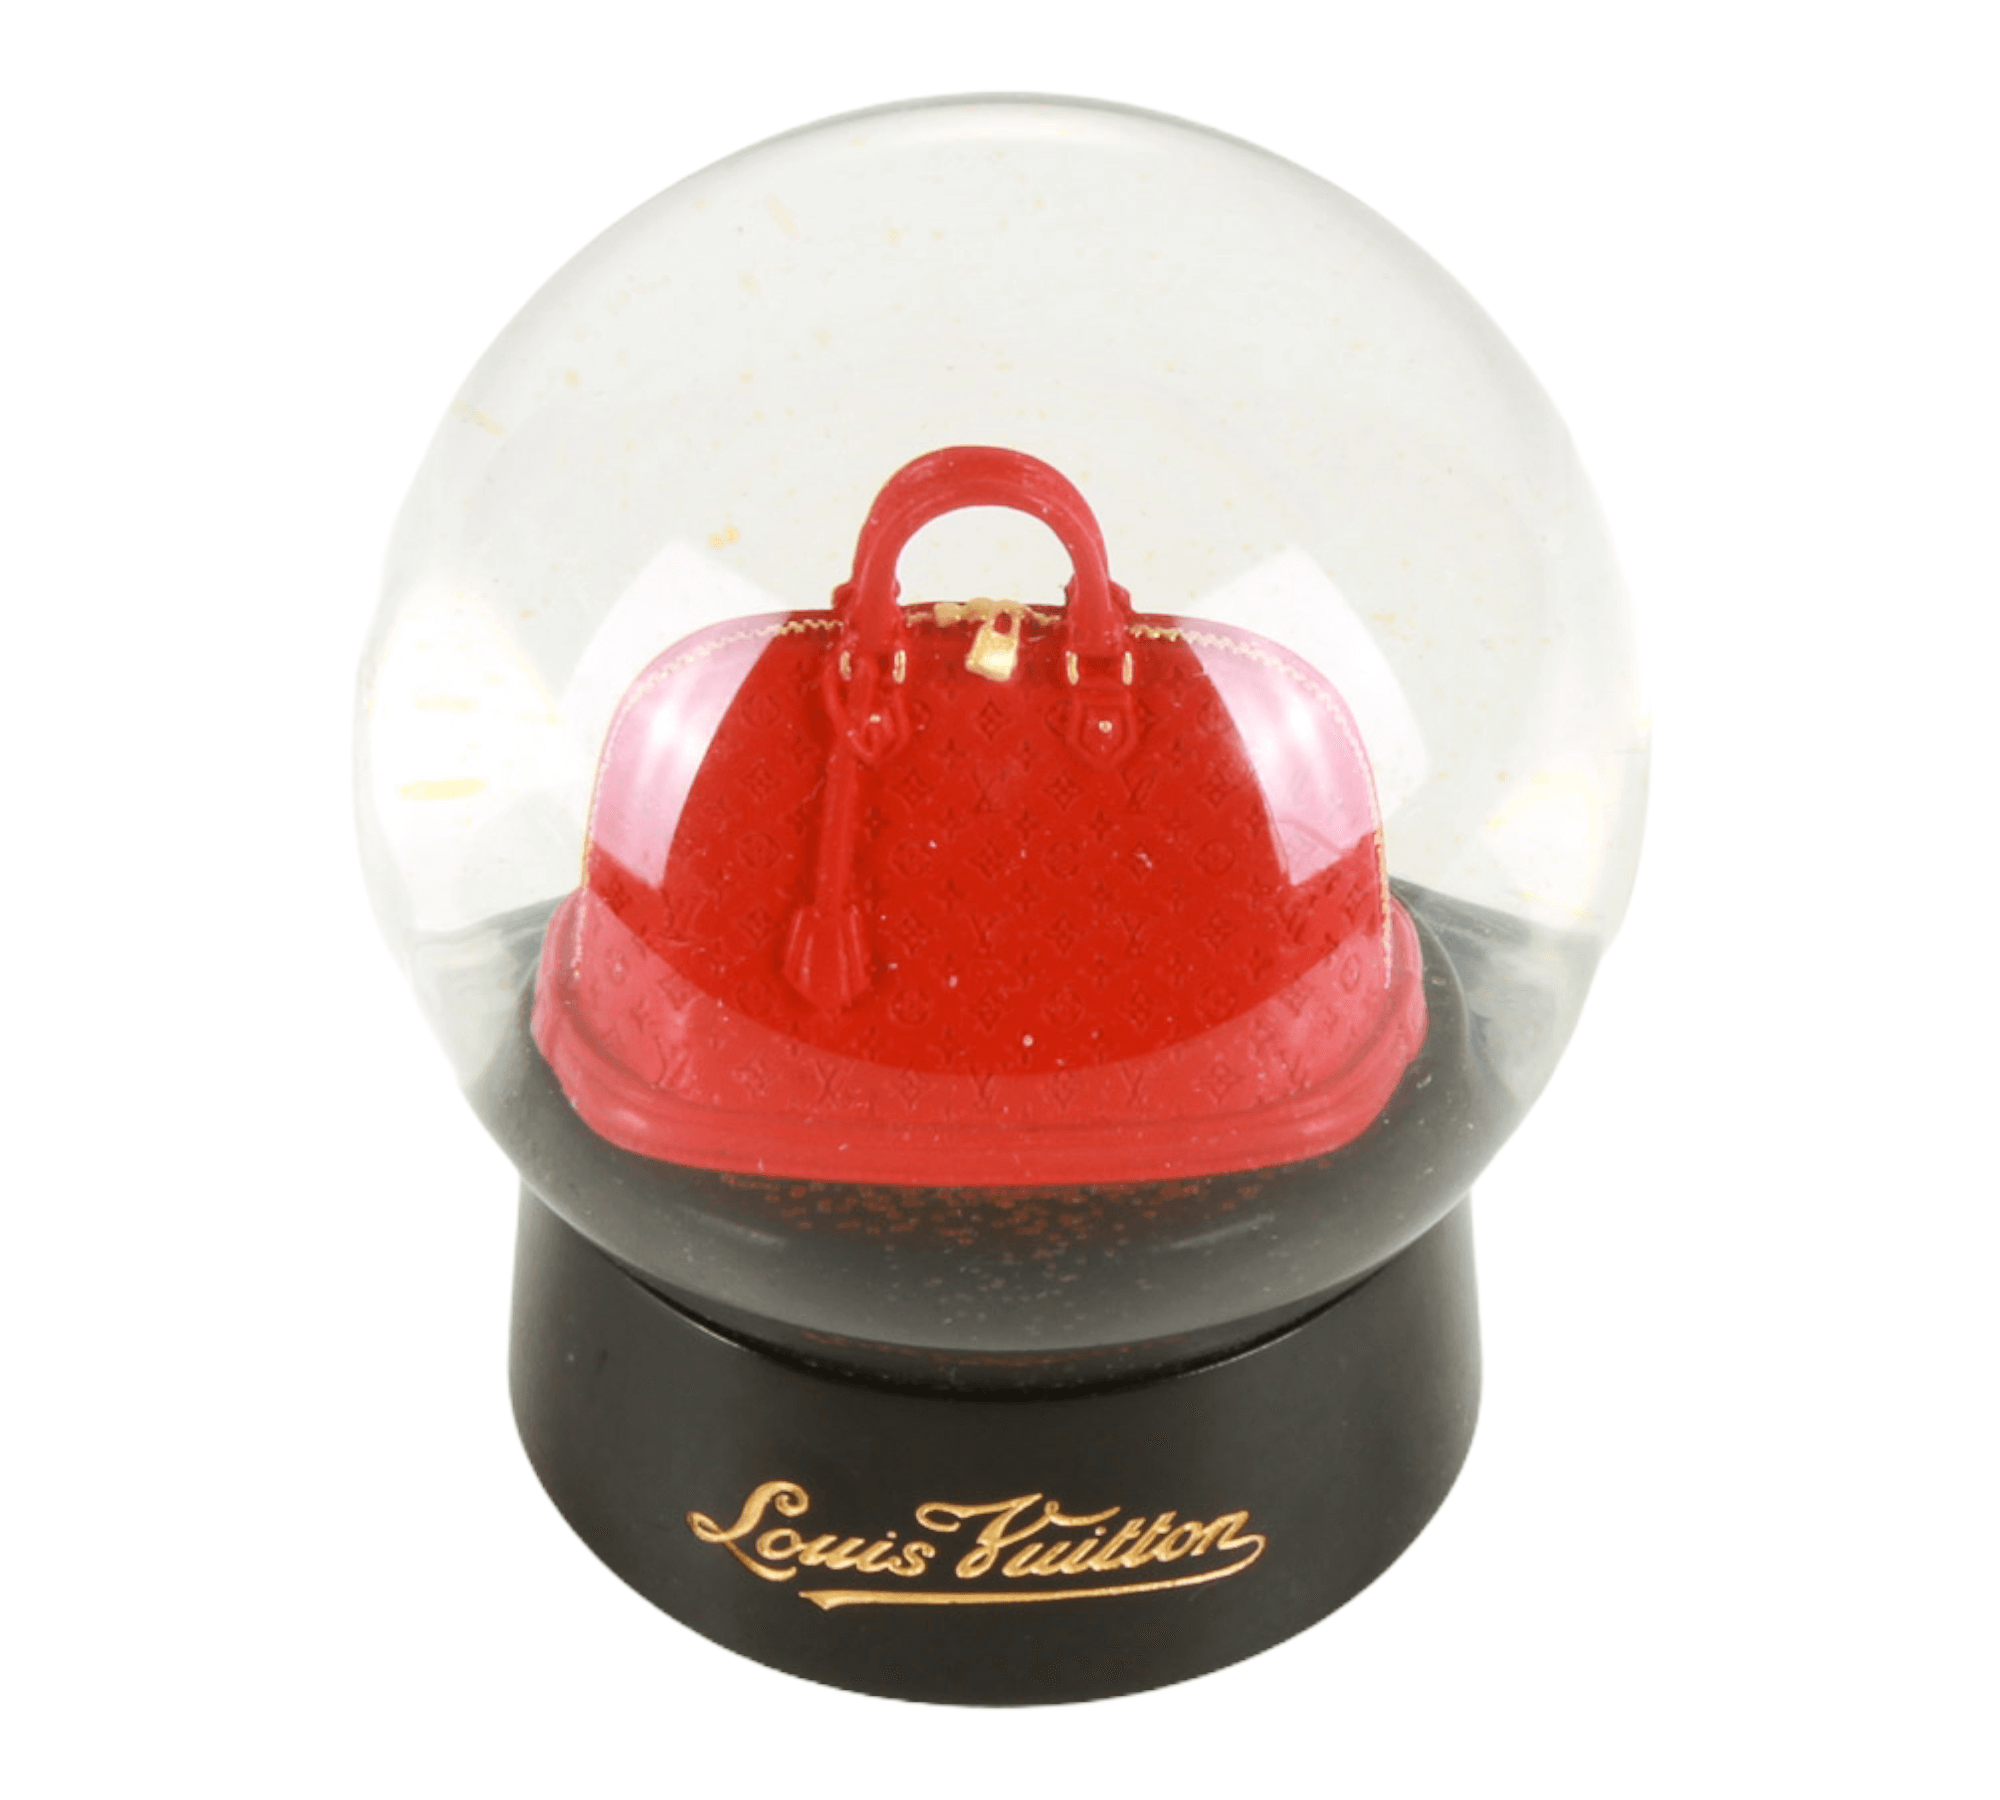 Louis Vuitton Limited Edition Snow Globe 